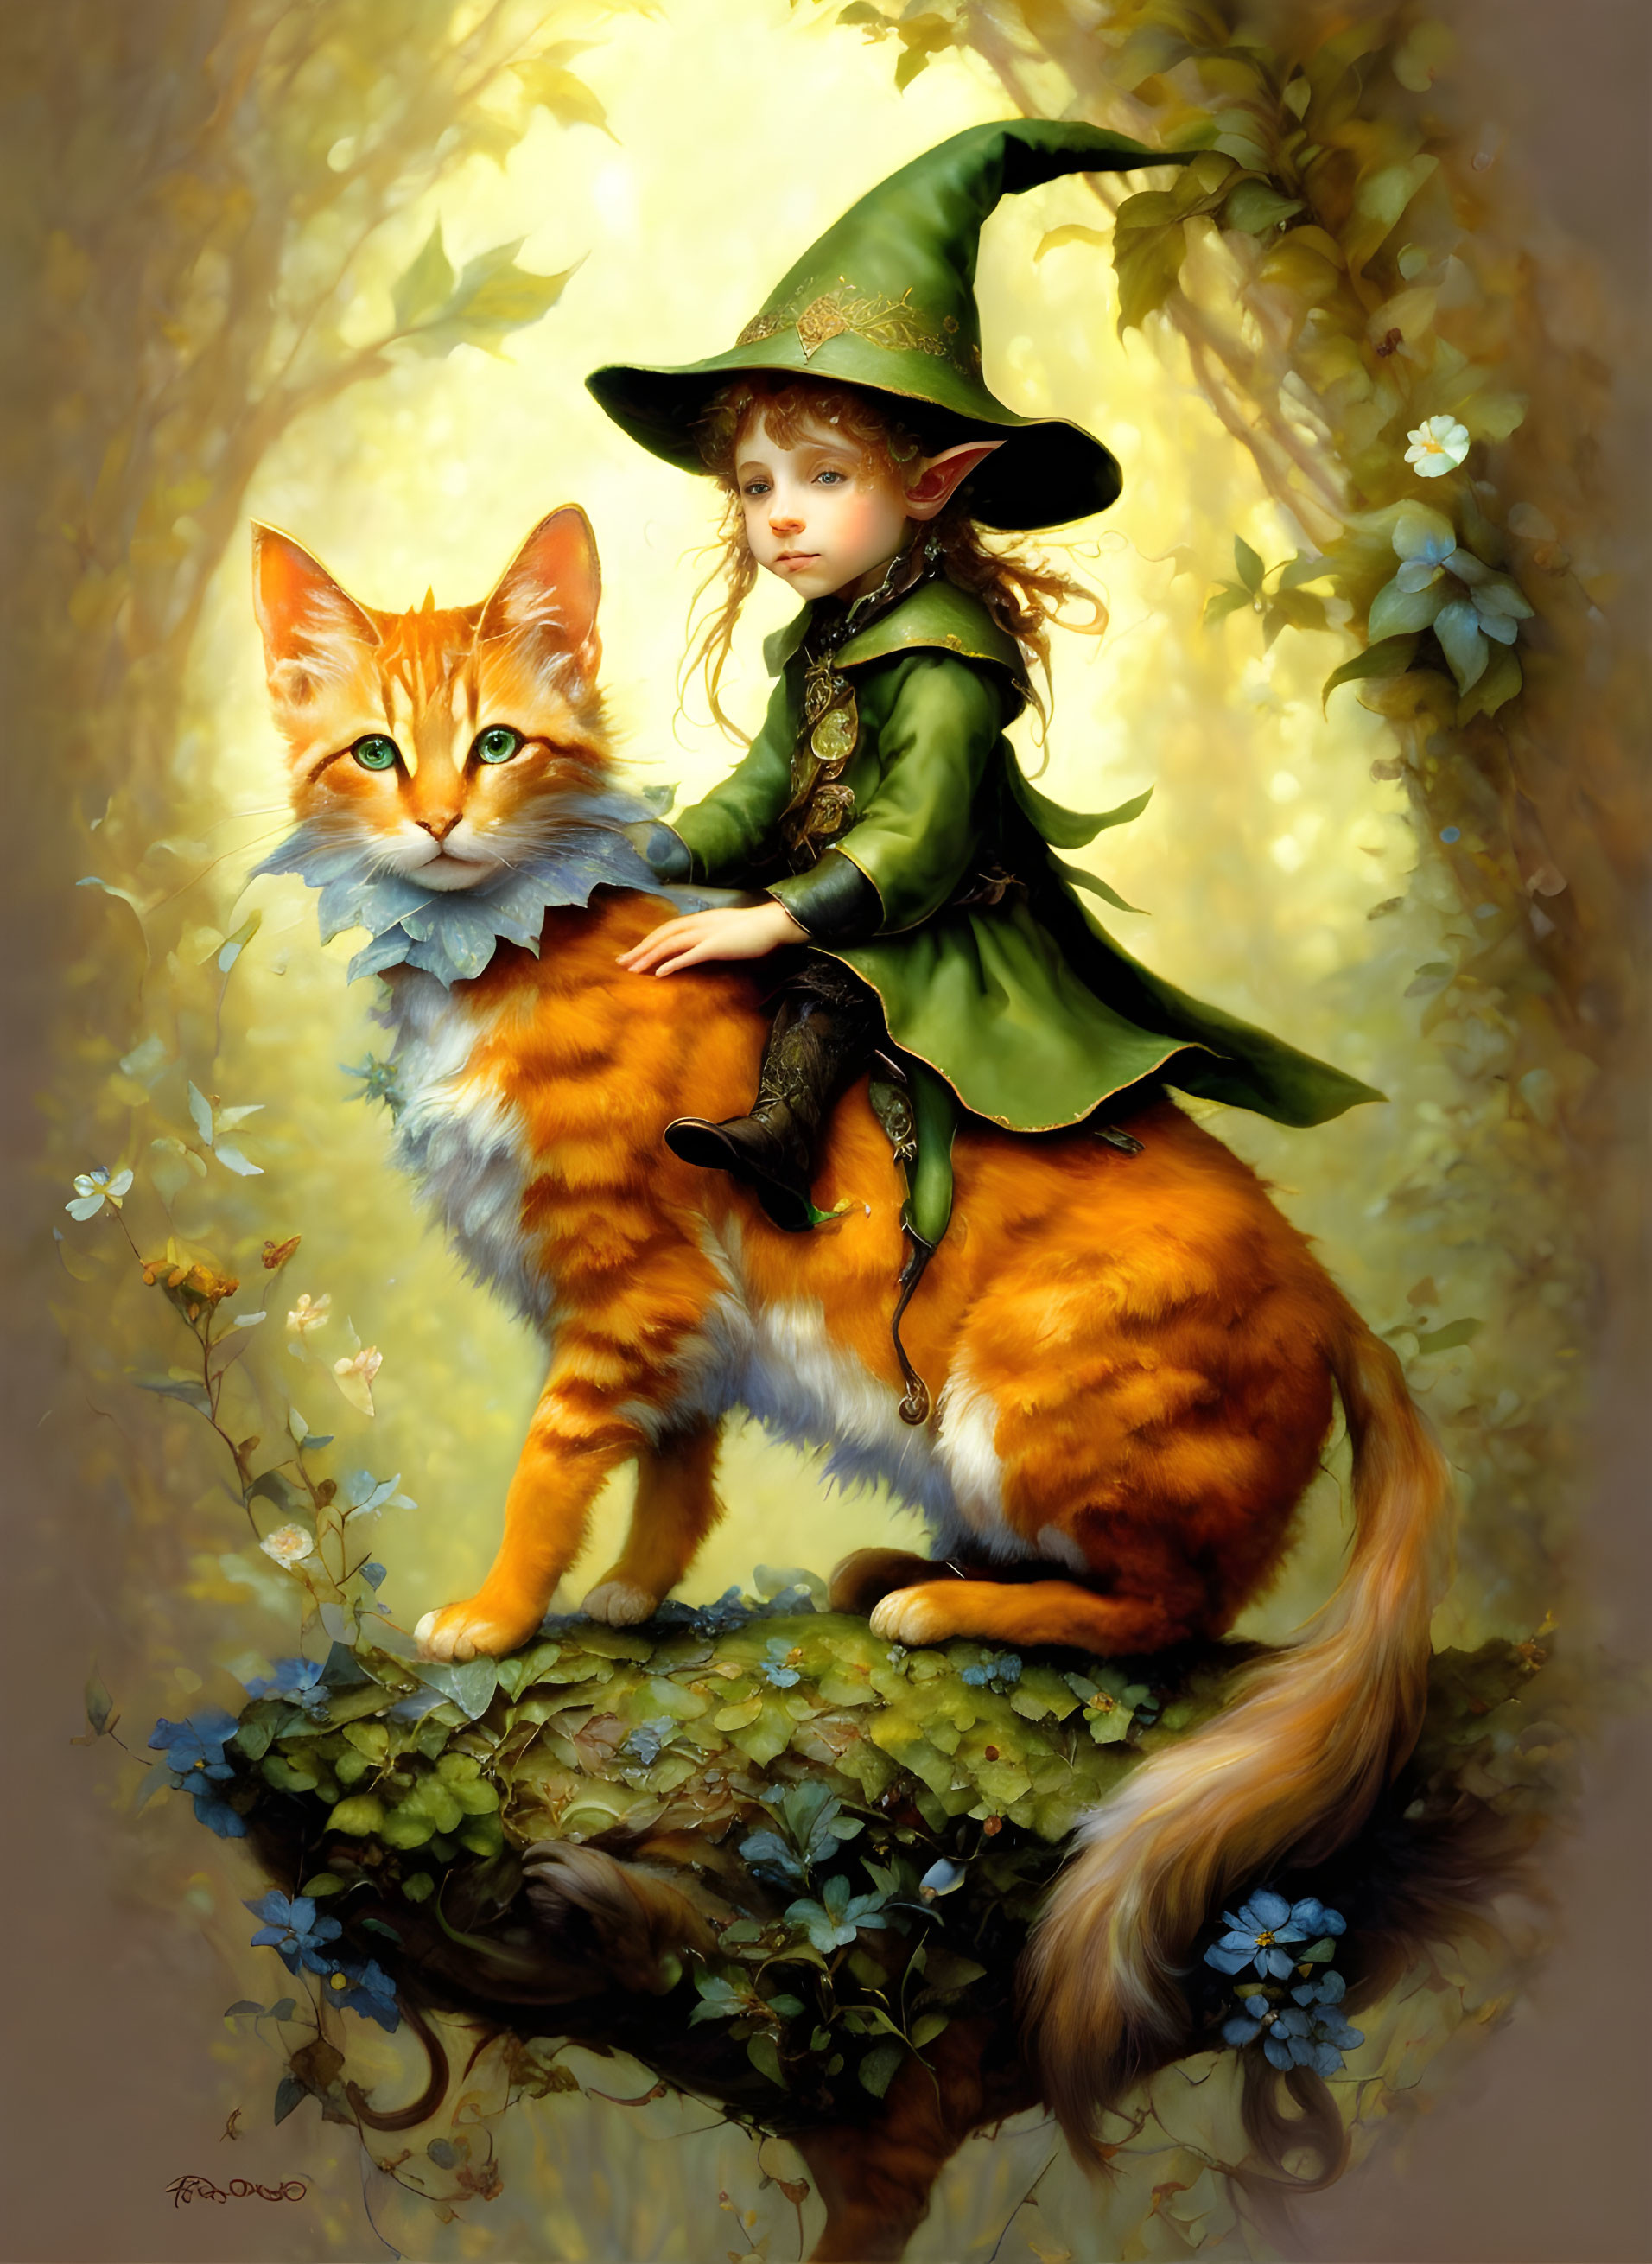 A cute little elf, riding on a cat